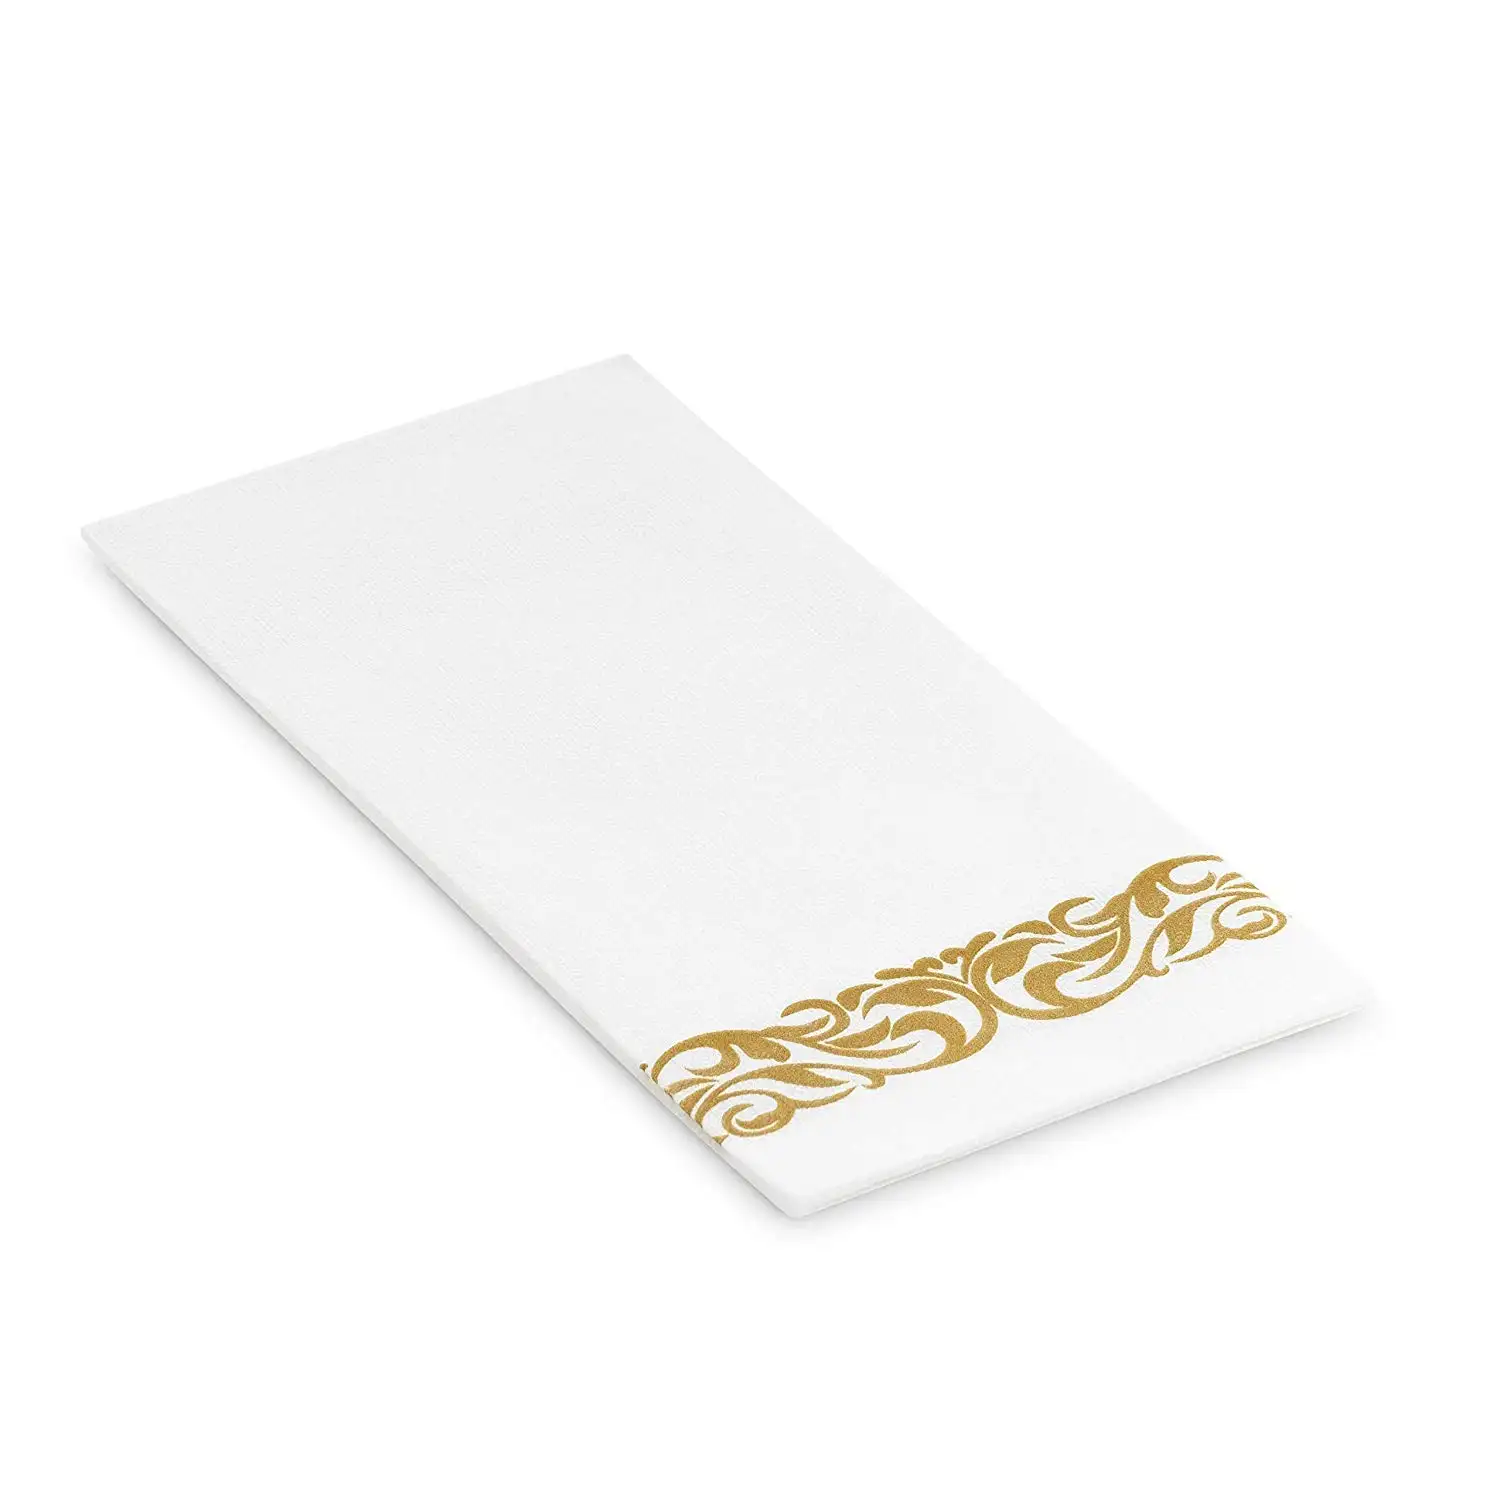 Impressão Virgin Wood Pulp linho sentir guardanapo guardanapo super absorvente airlaid guardanapo papel